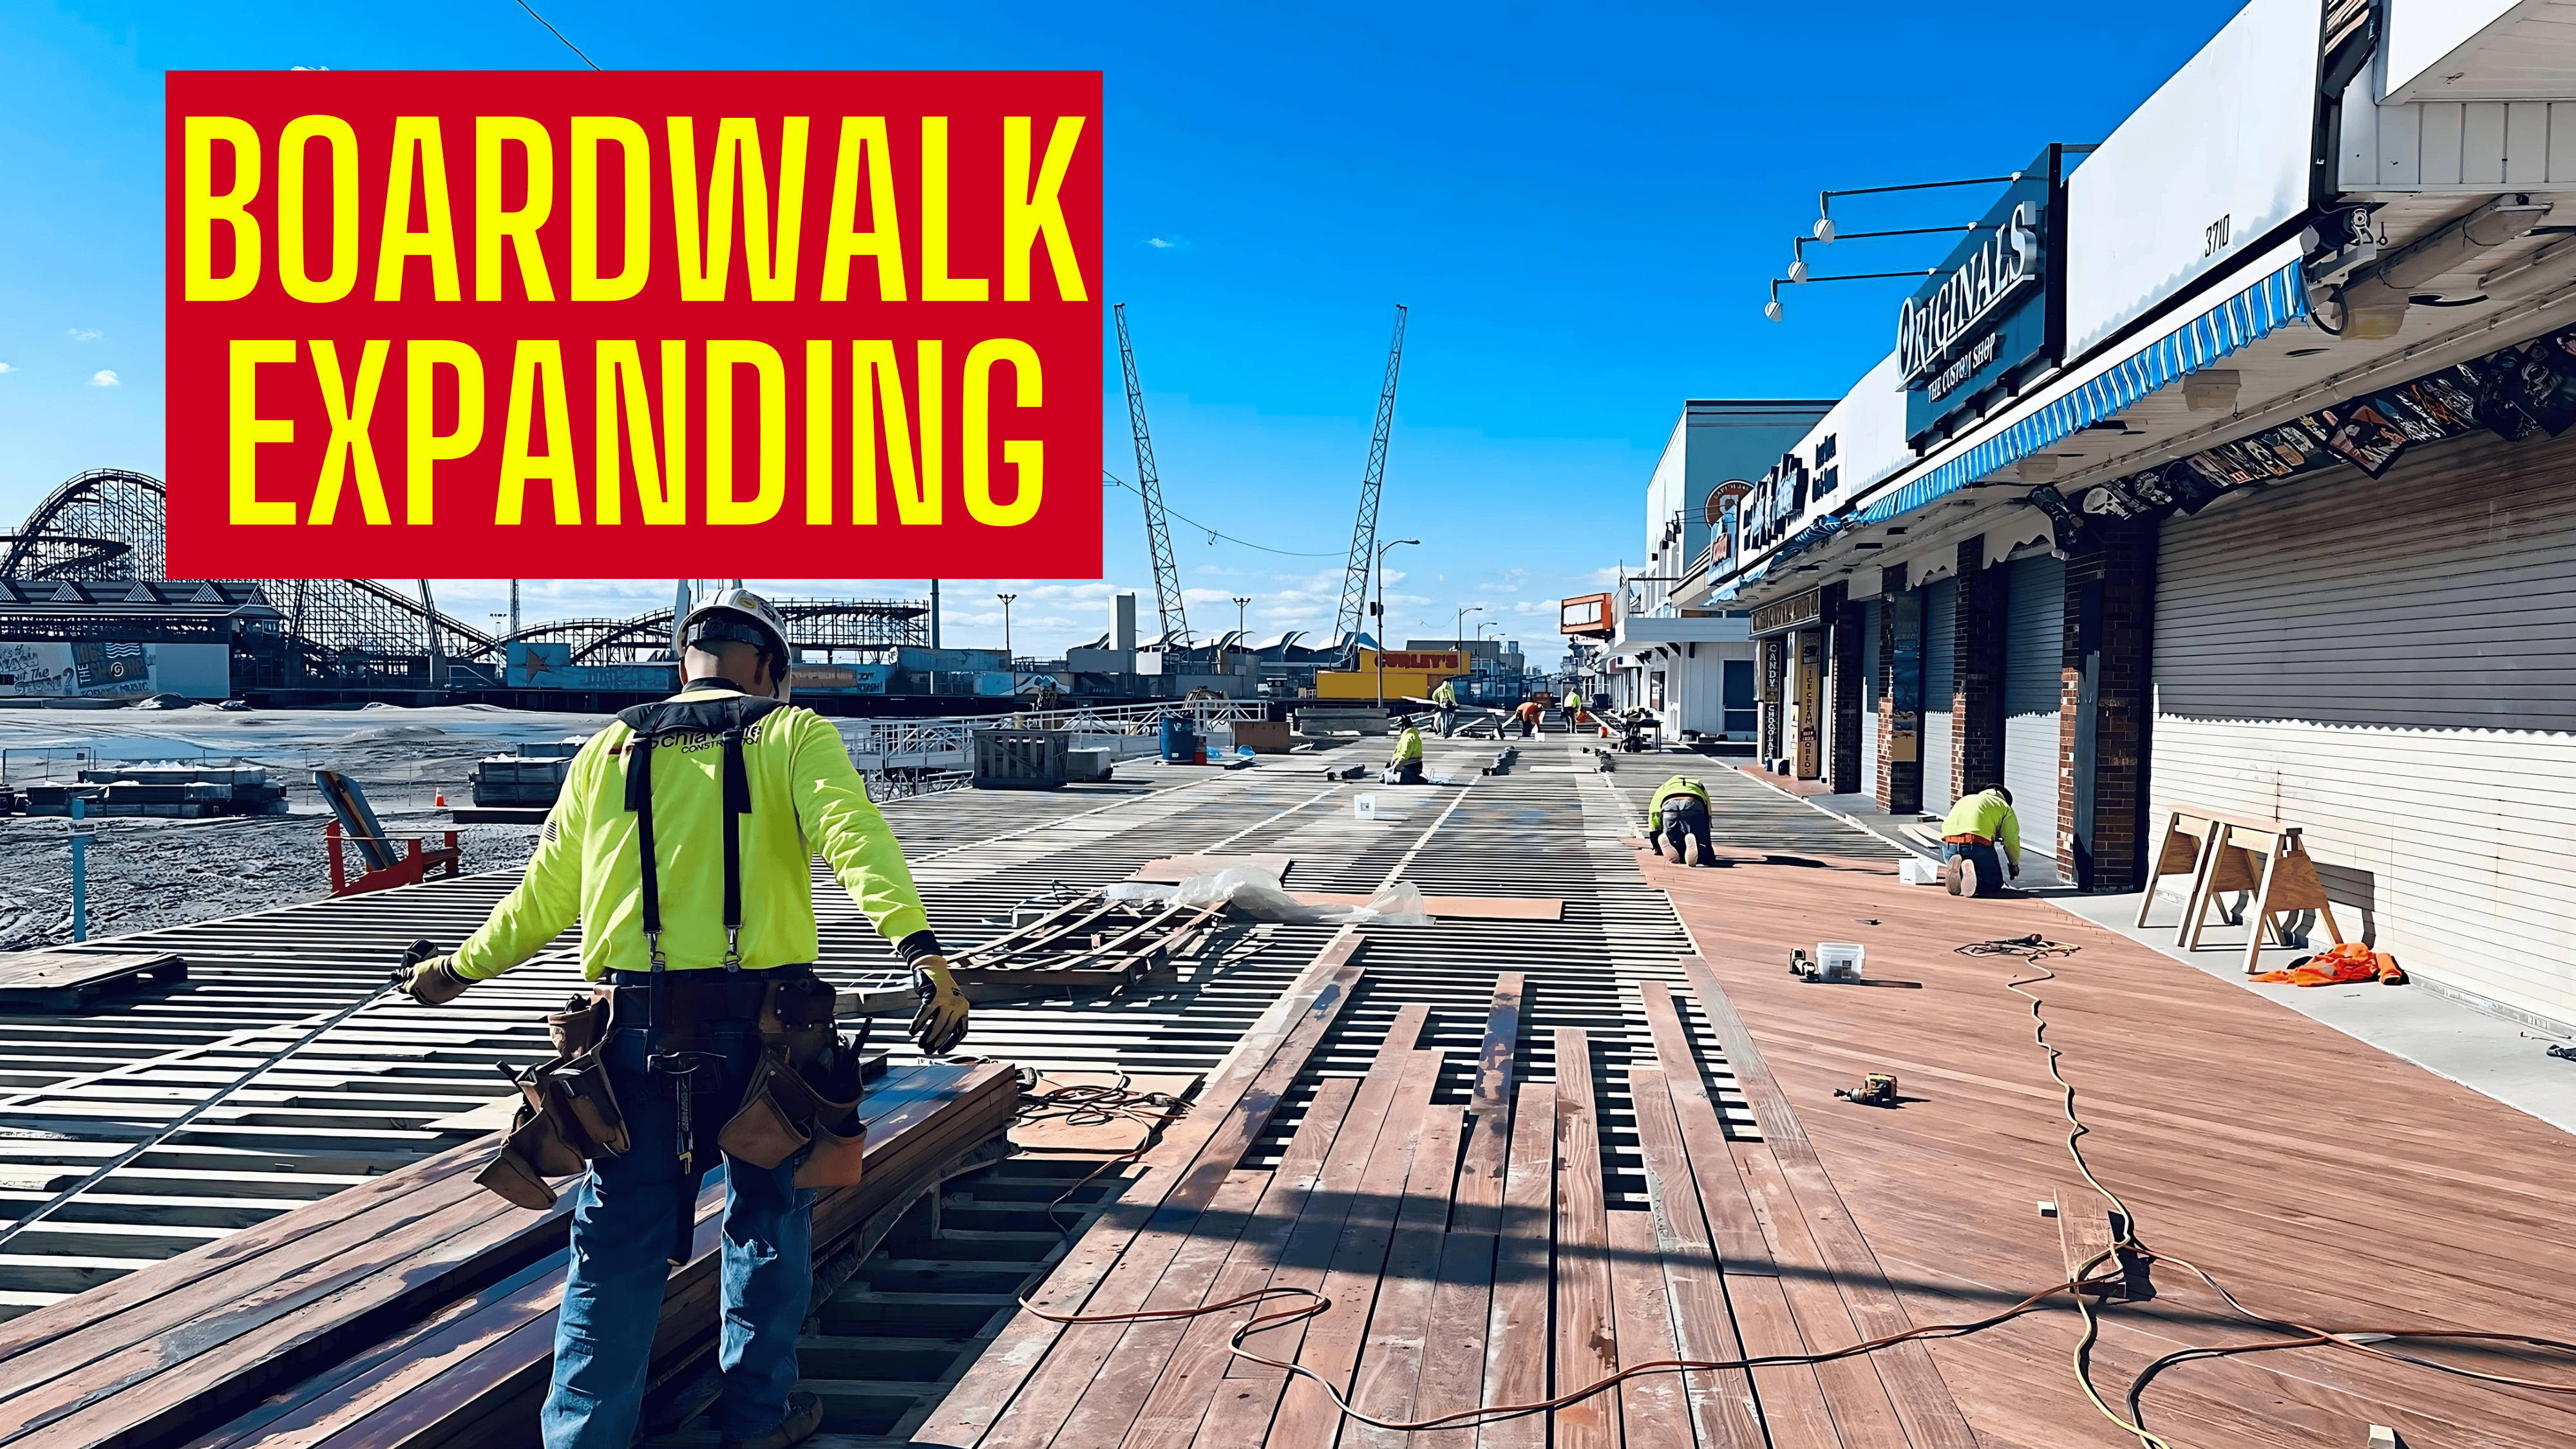 The Wildwood Boardwalk is Expanding